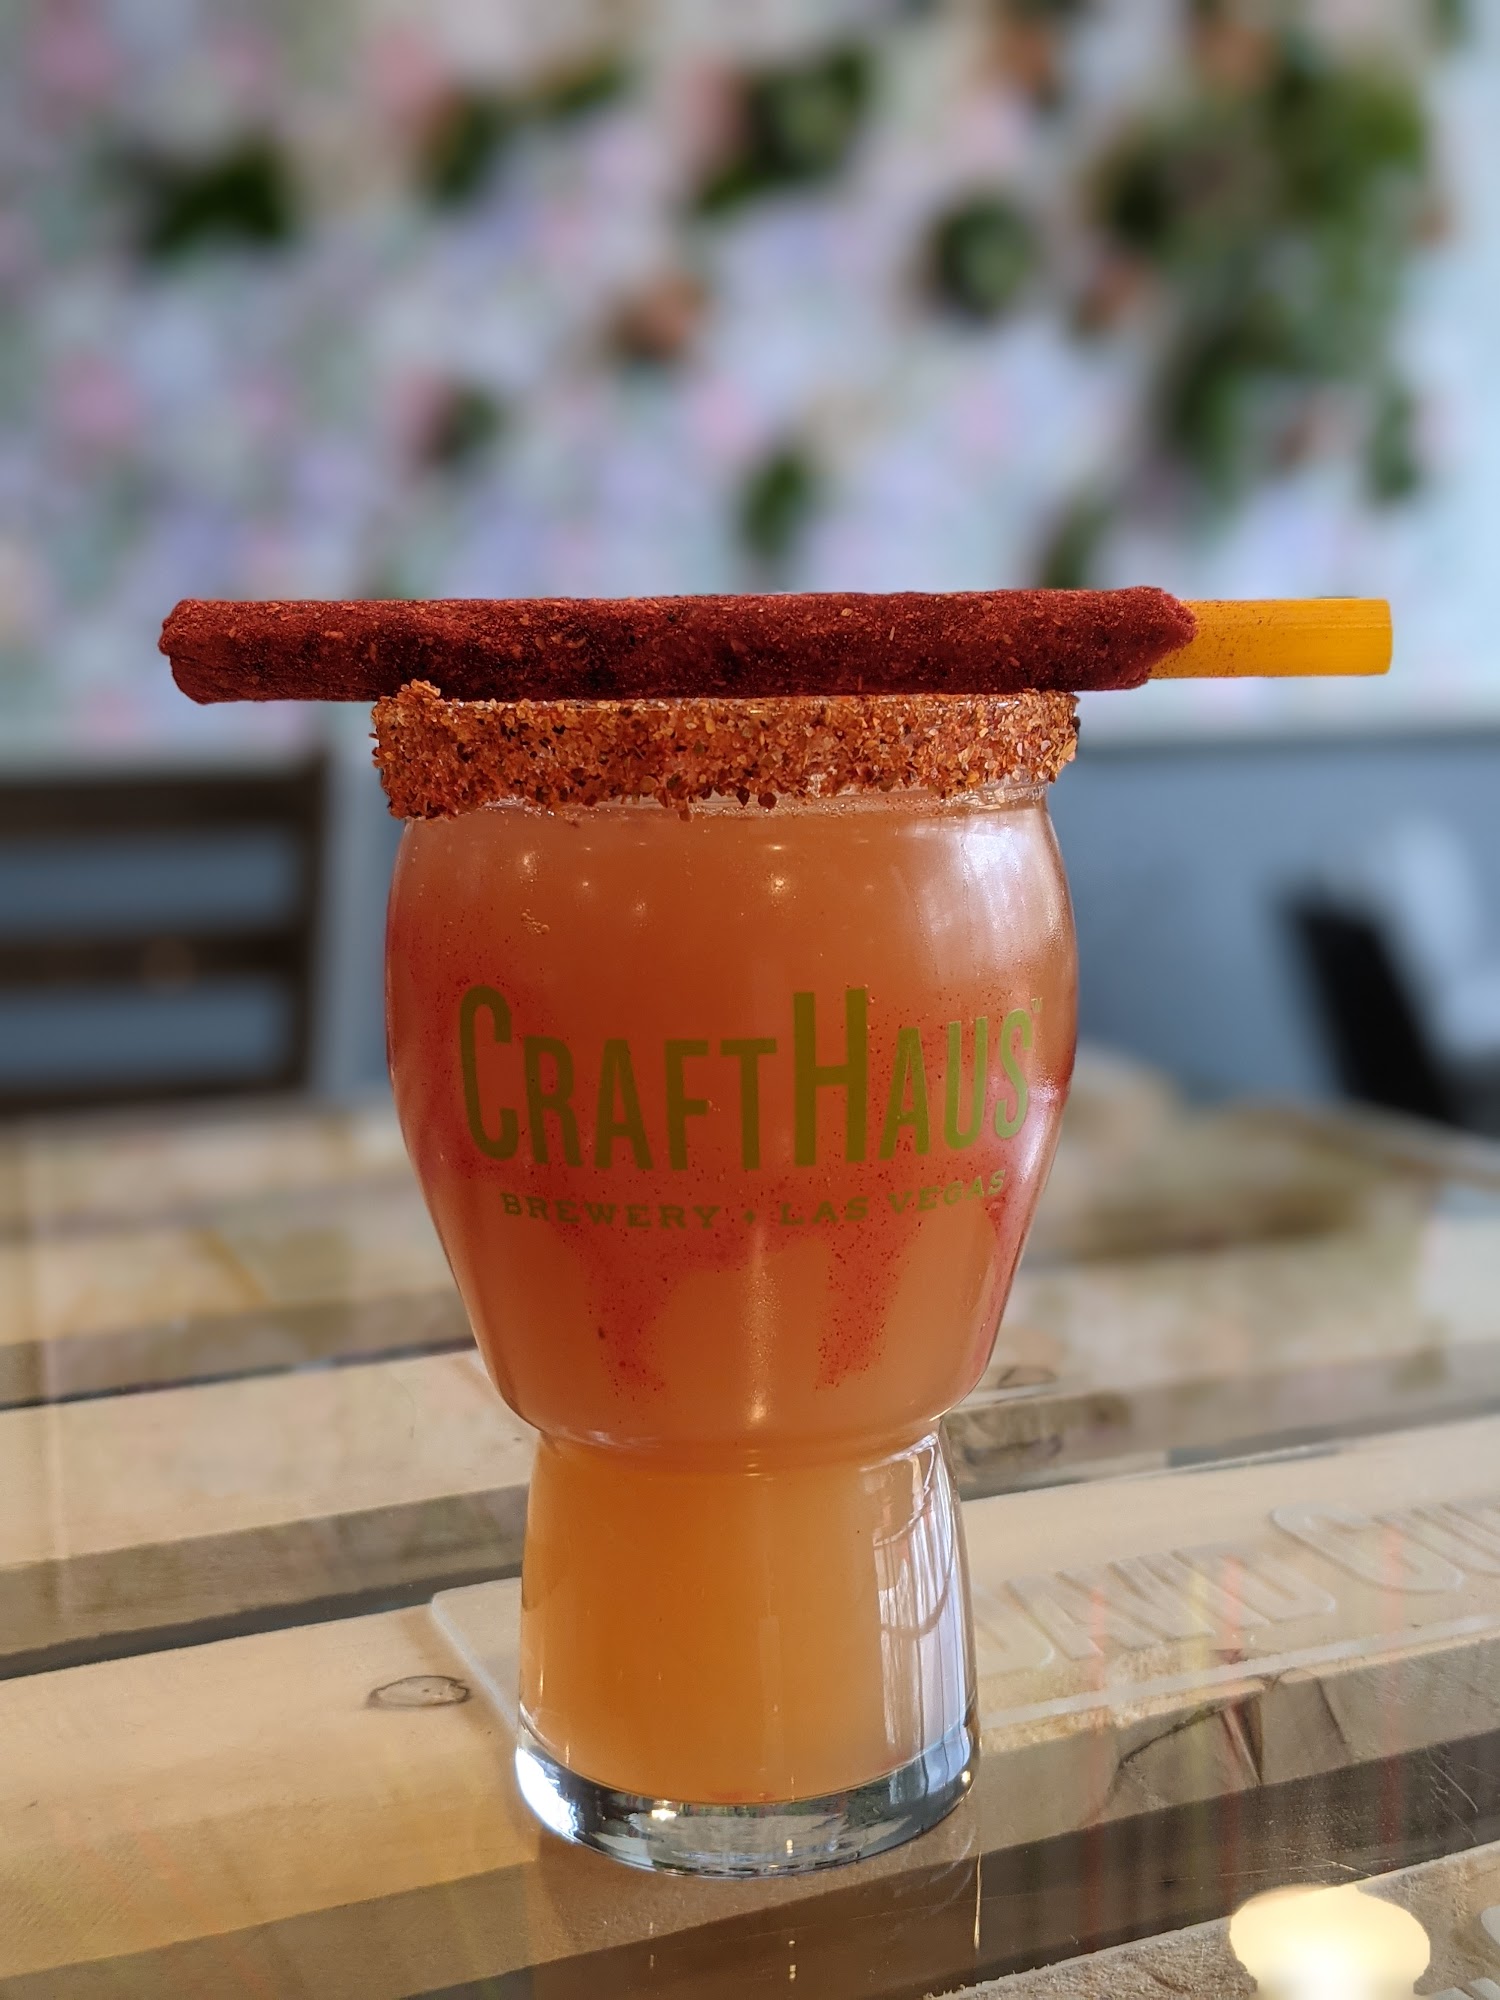 CraftHaus Brewery